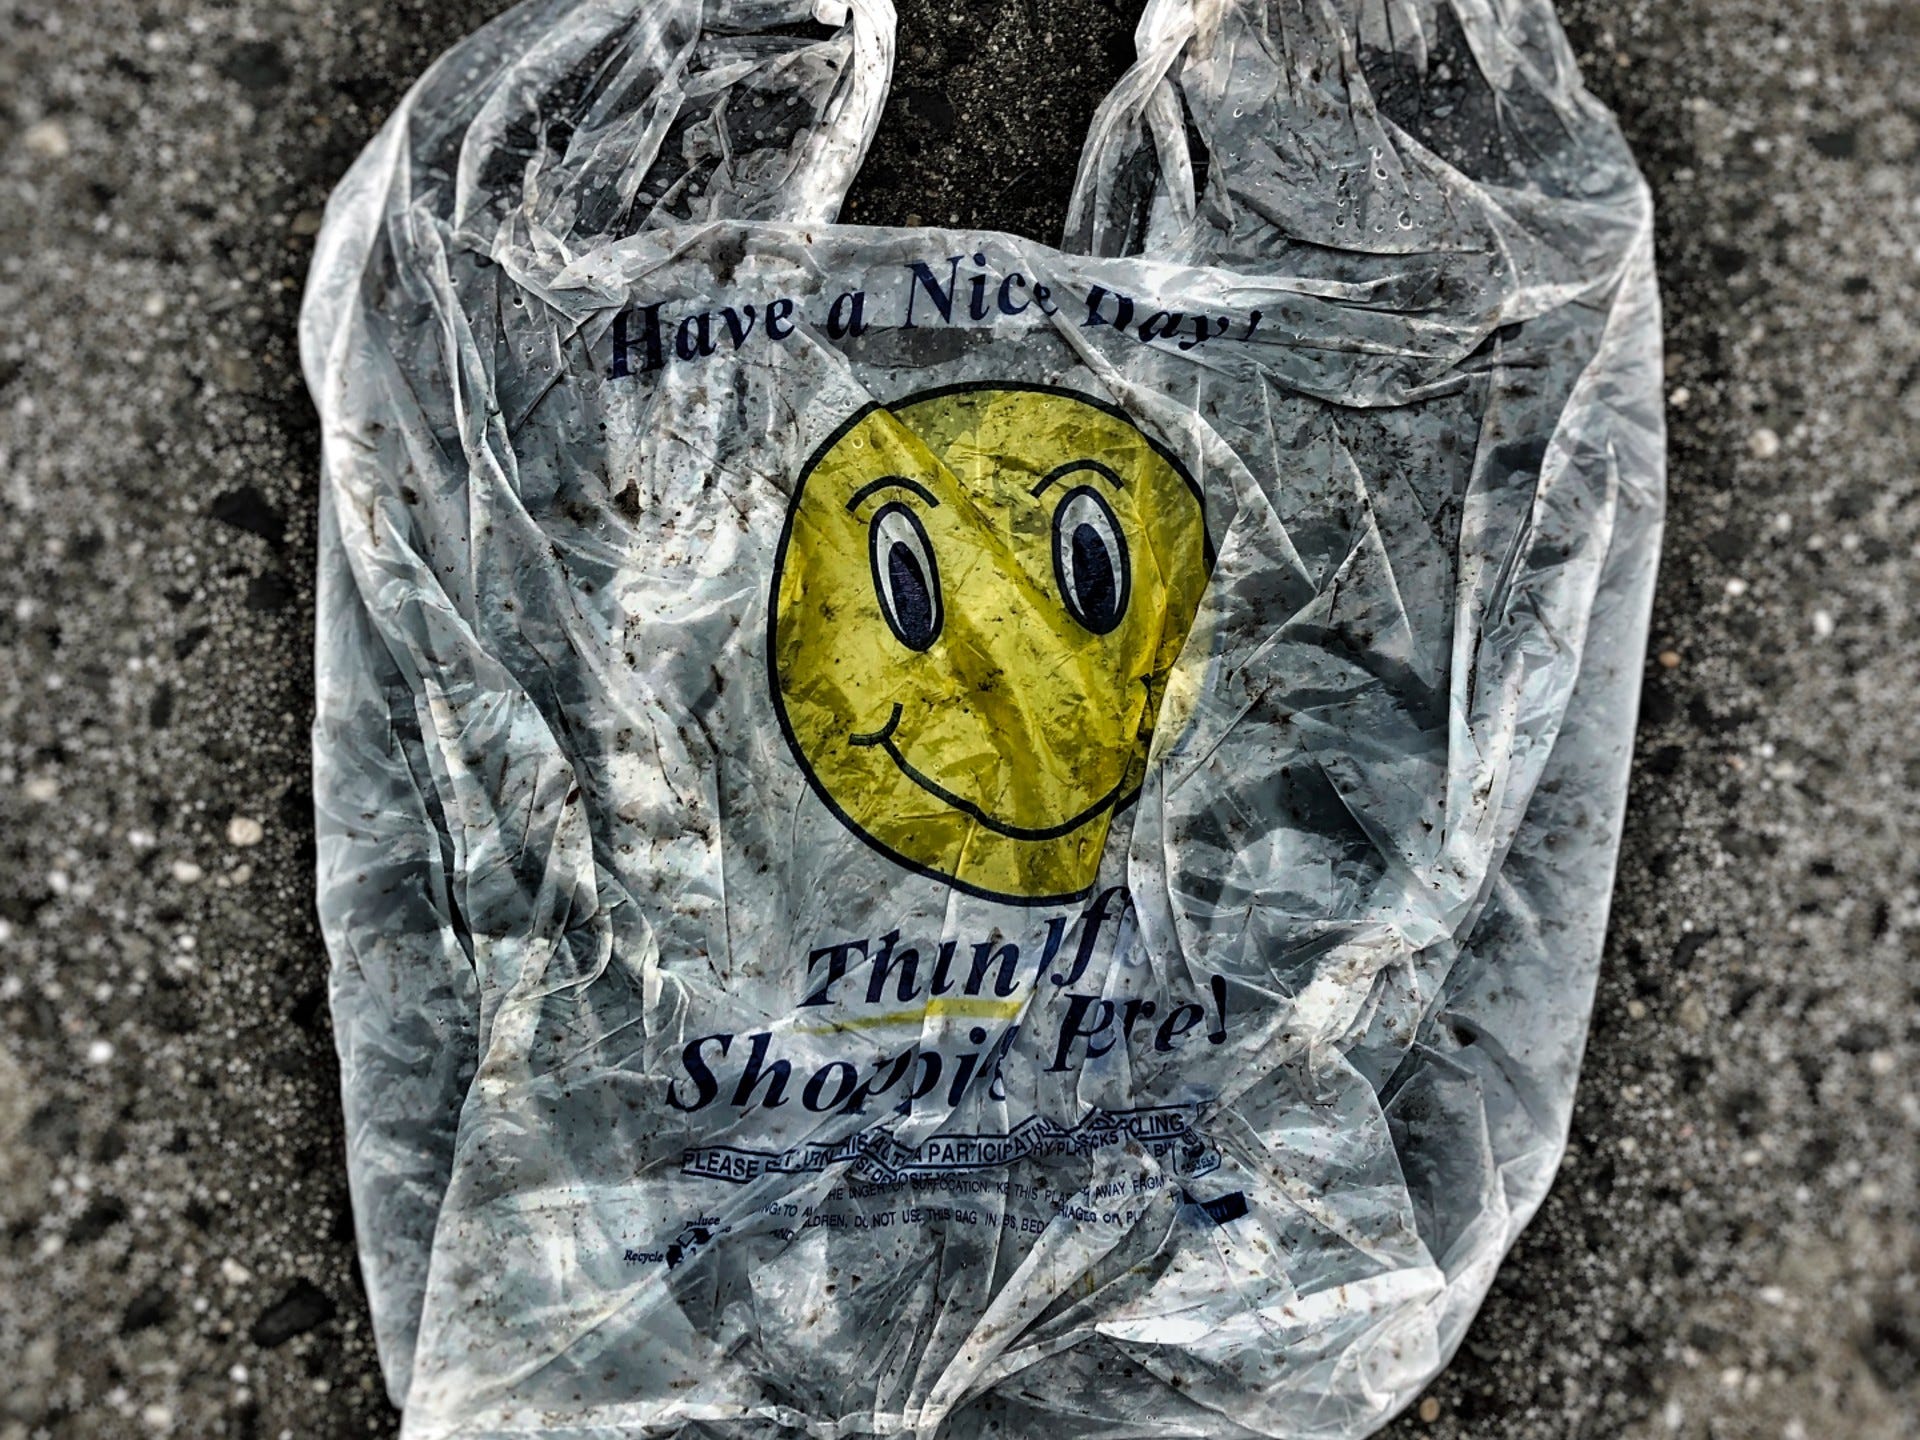 nj plastic consumption triples after single-use plastic bag ban: study